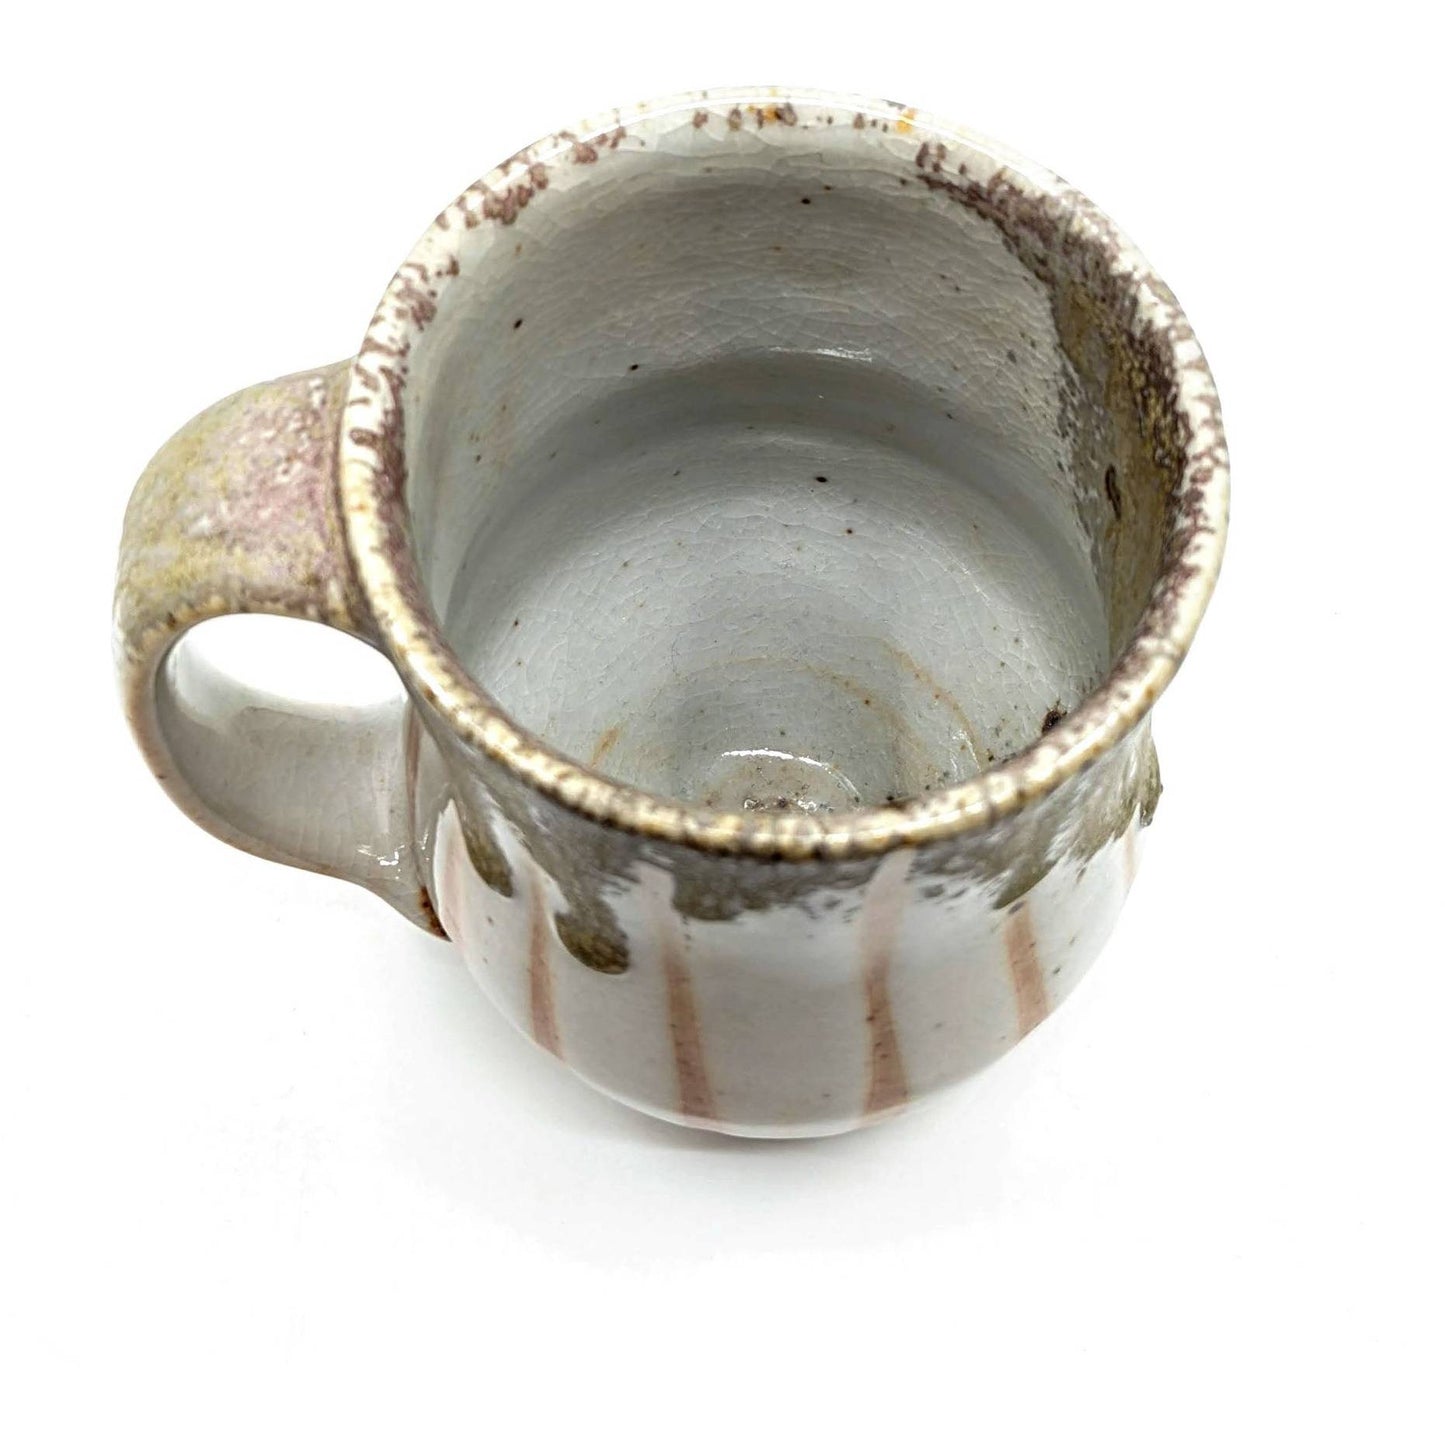 Barrel Coffee Mug